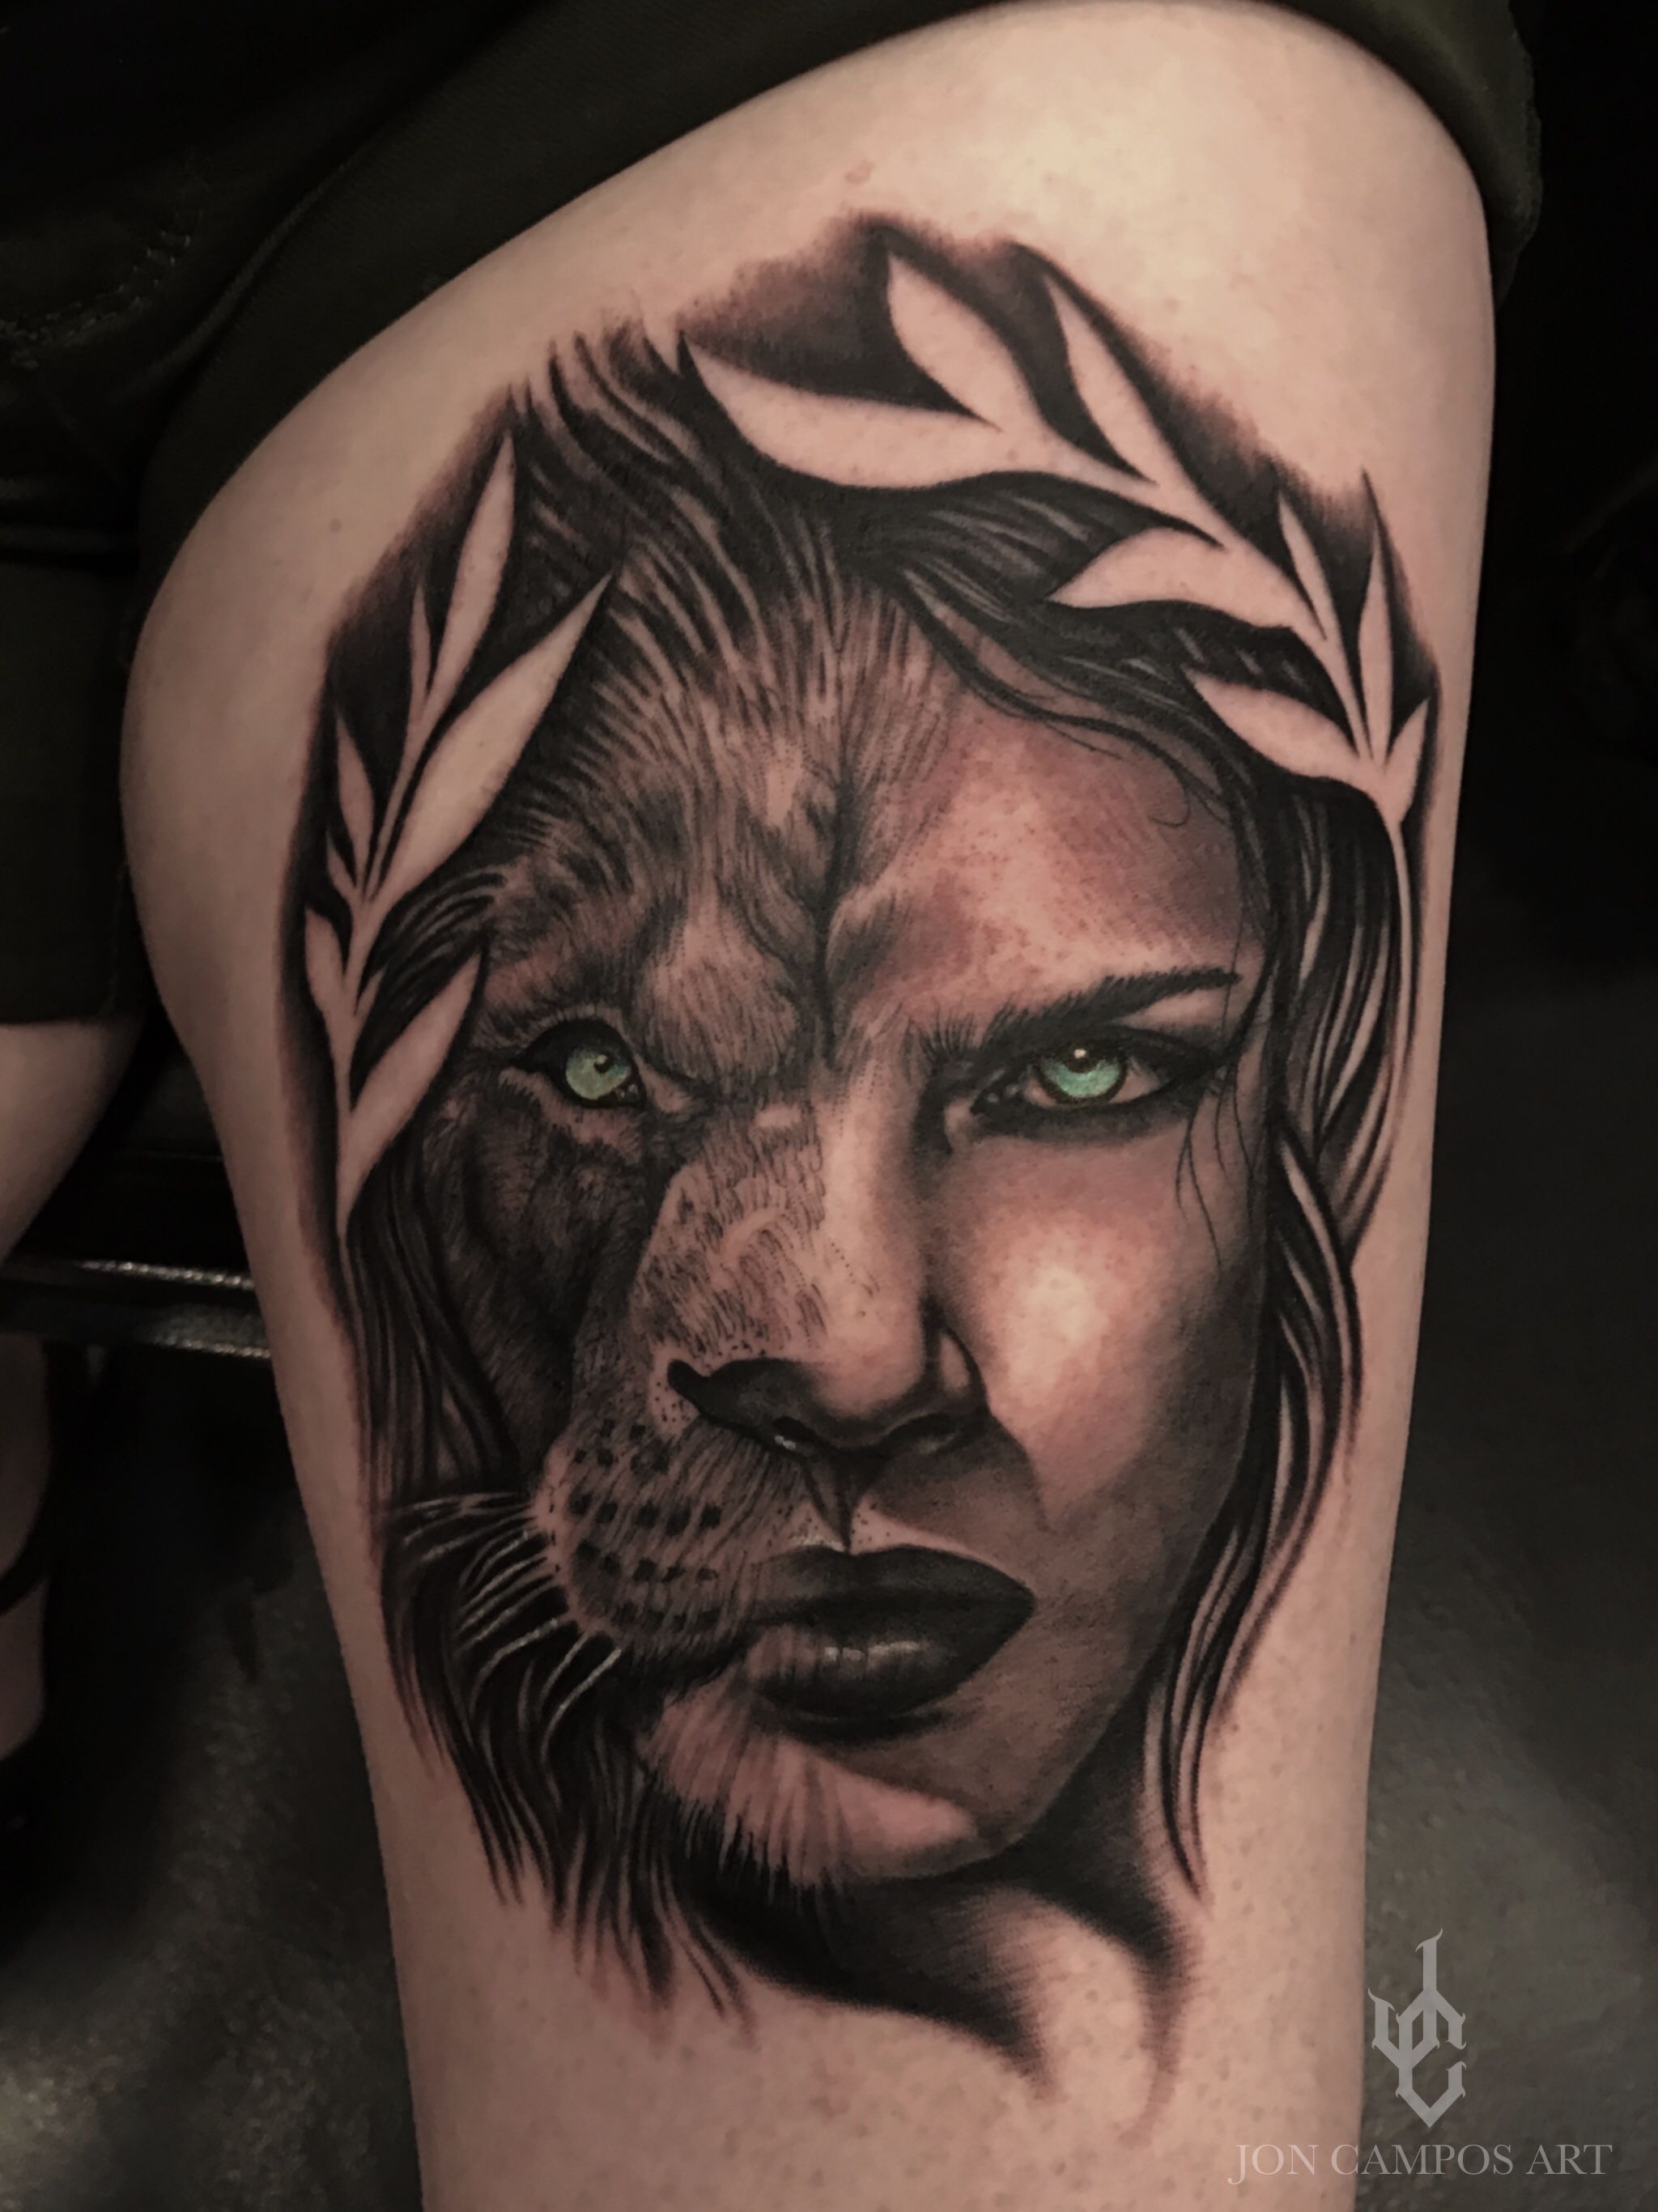 half lion half human face tattoo